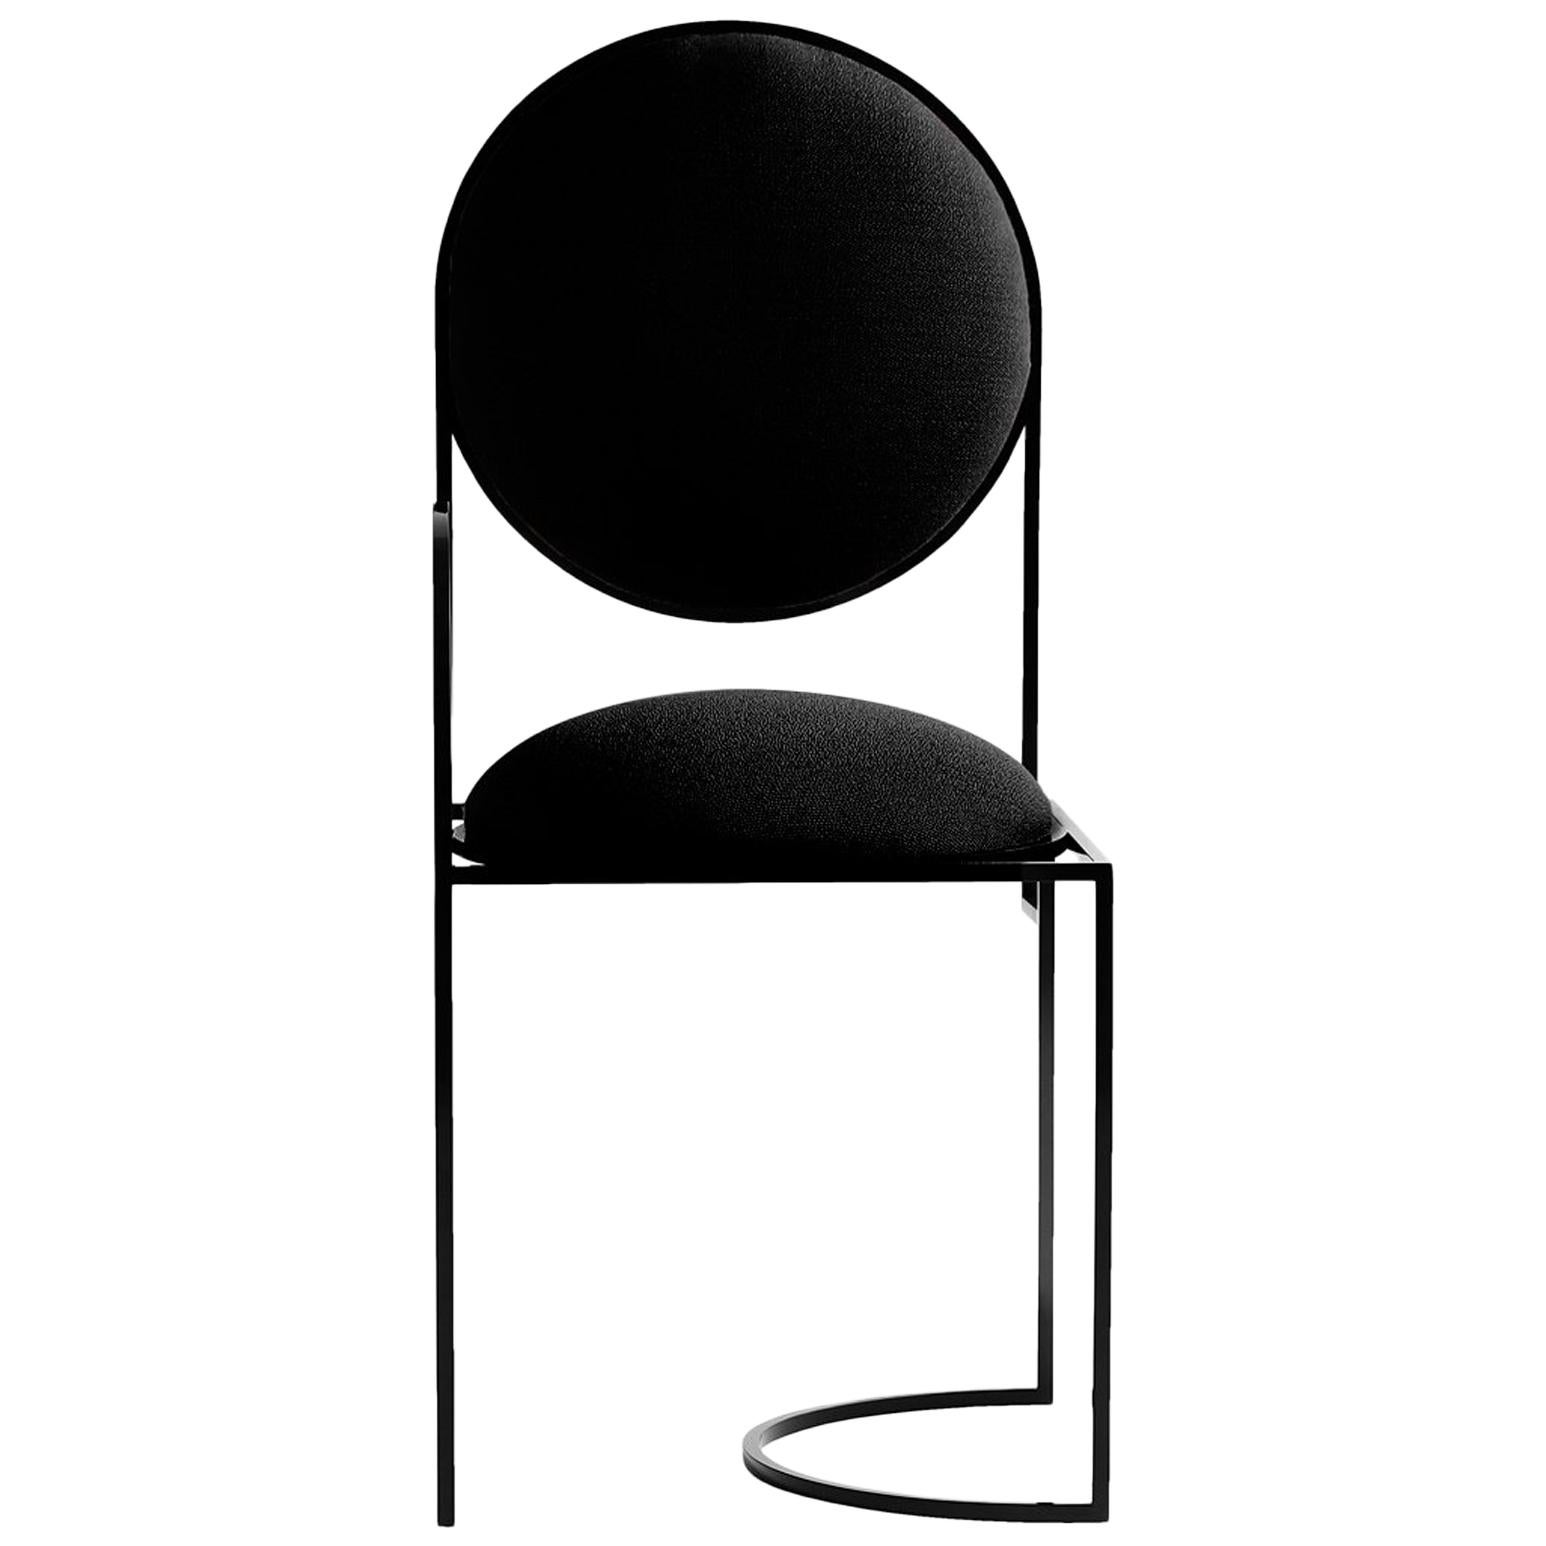 Solar Chair in Black Wool and Black Coated Steel Frame, by Lara Bohinc